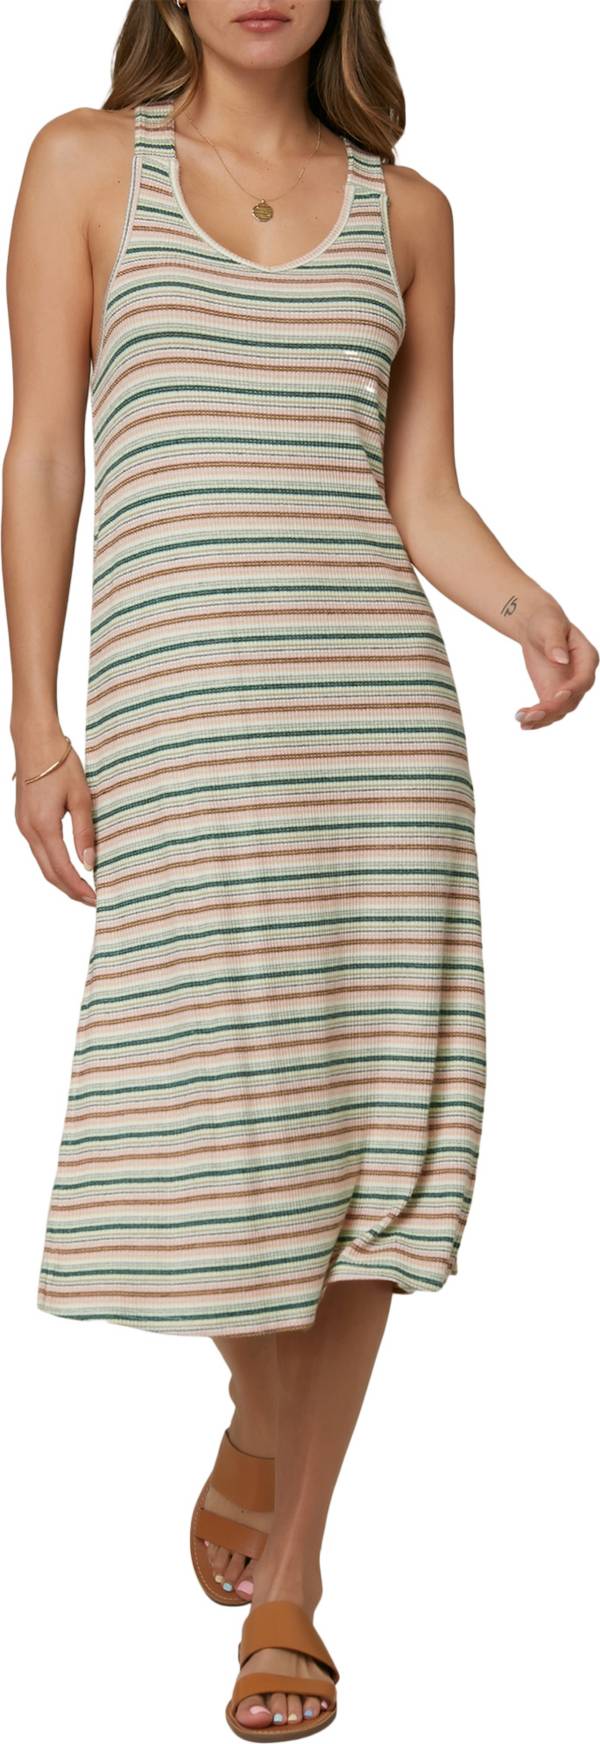 O'Neill Women's Aquaria Stripe Dress product image